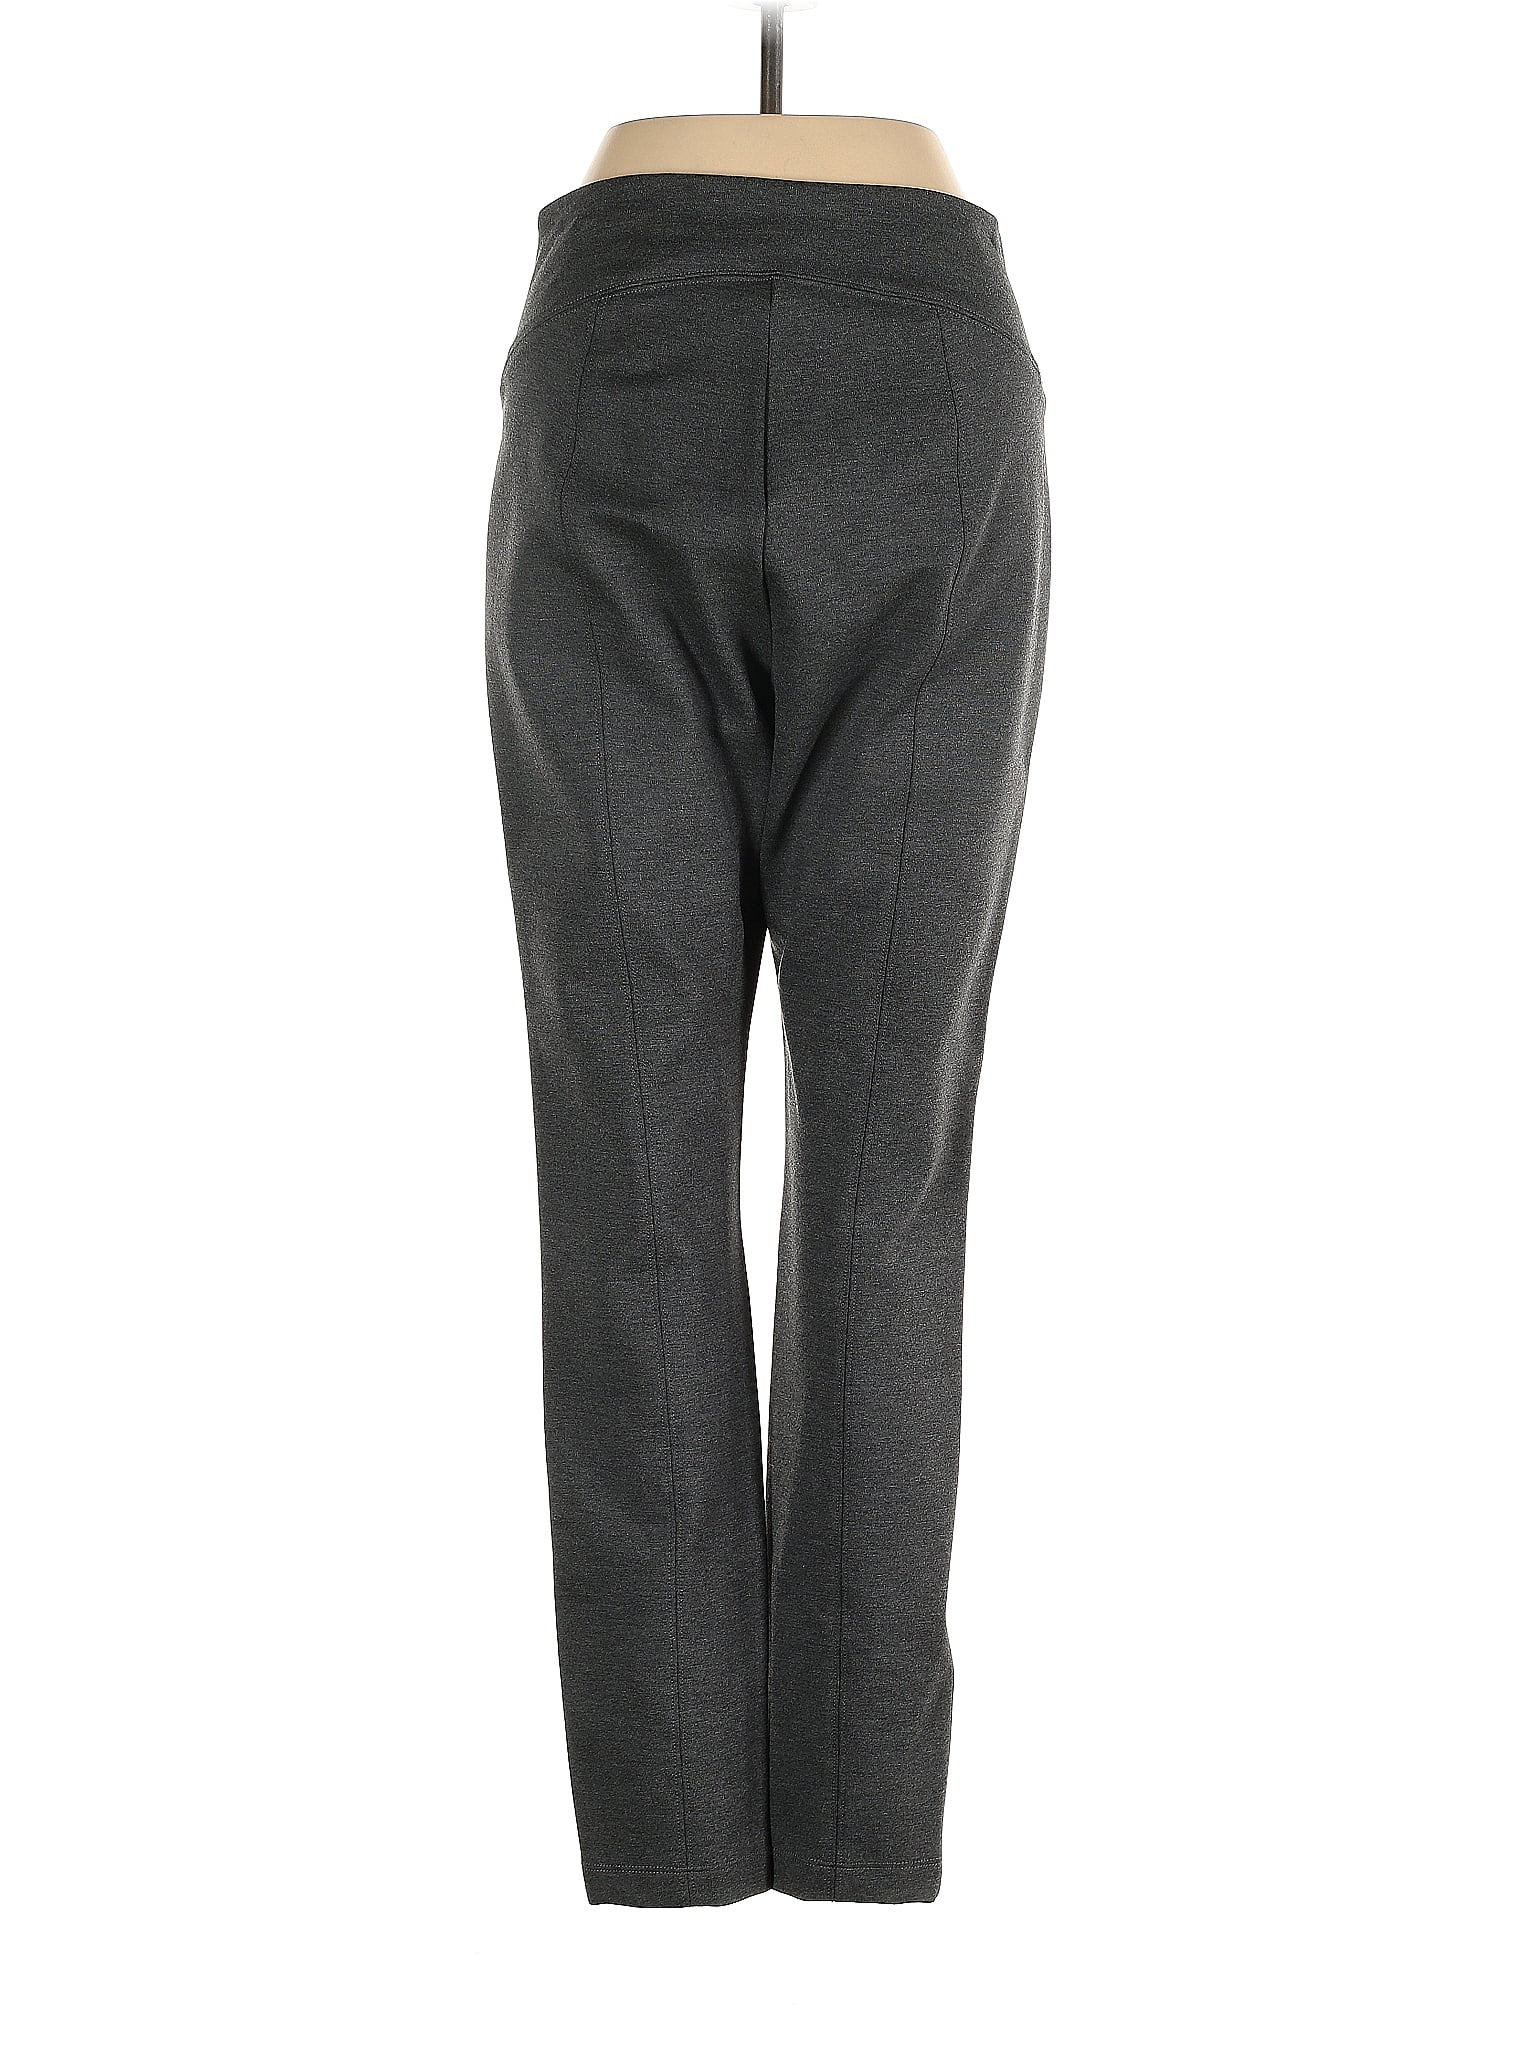 Matilda Jane Gray Dress Pants Size S - 56% off